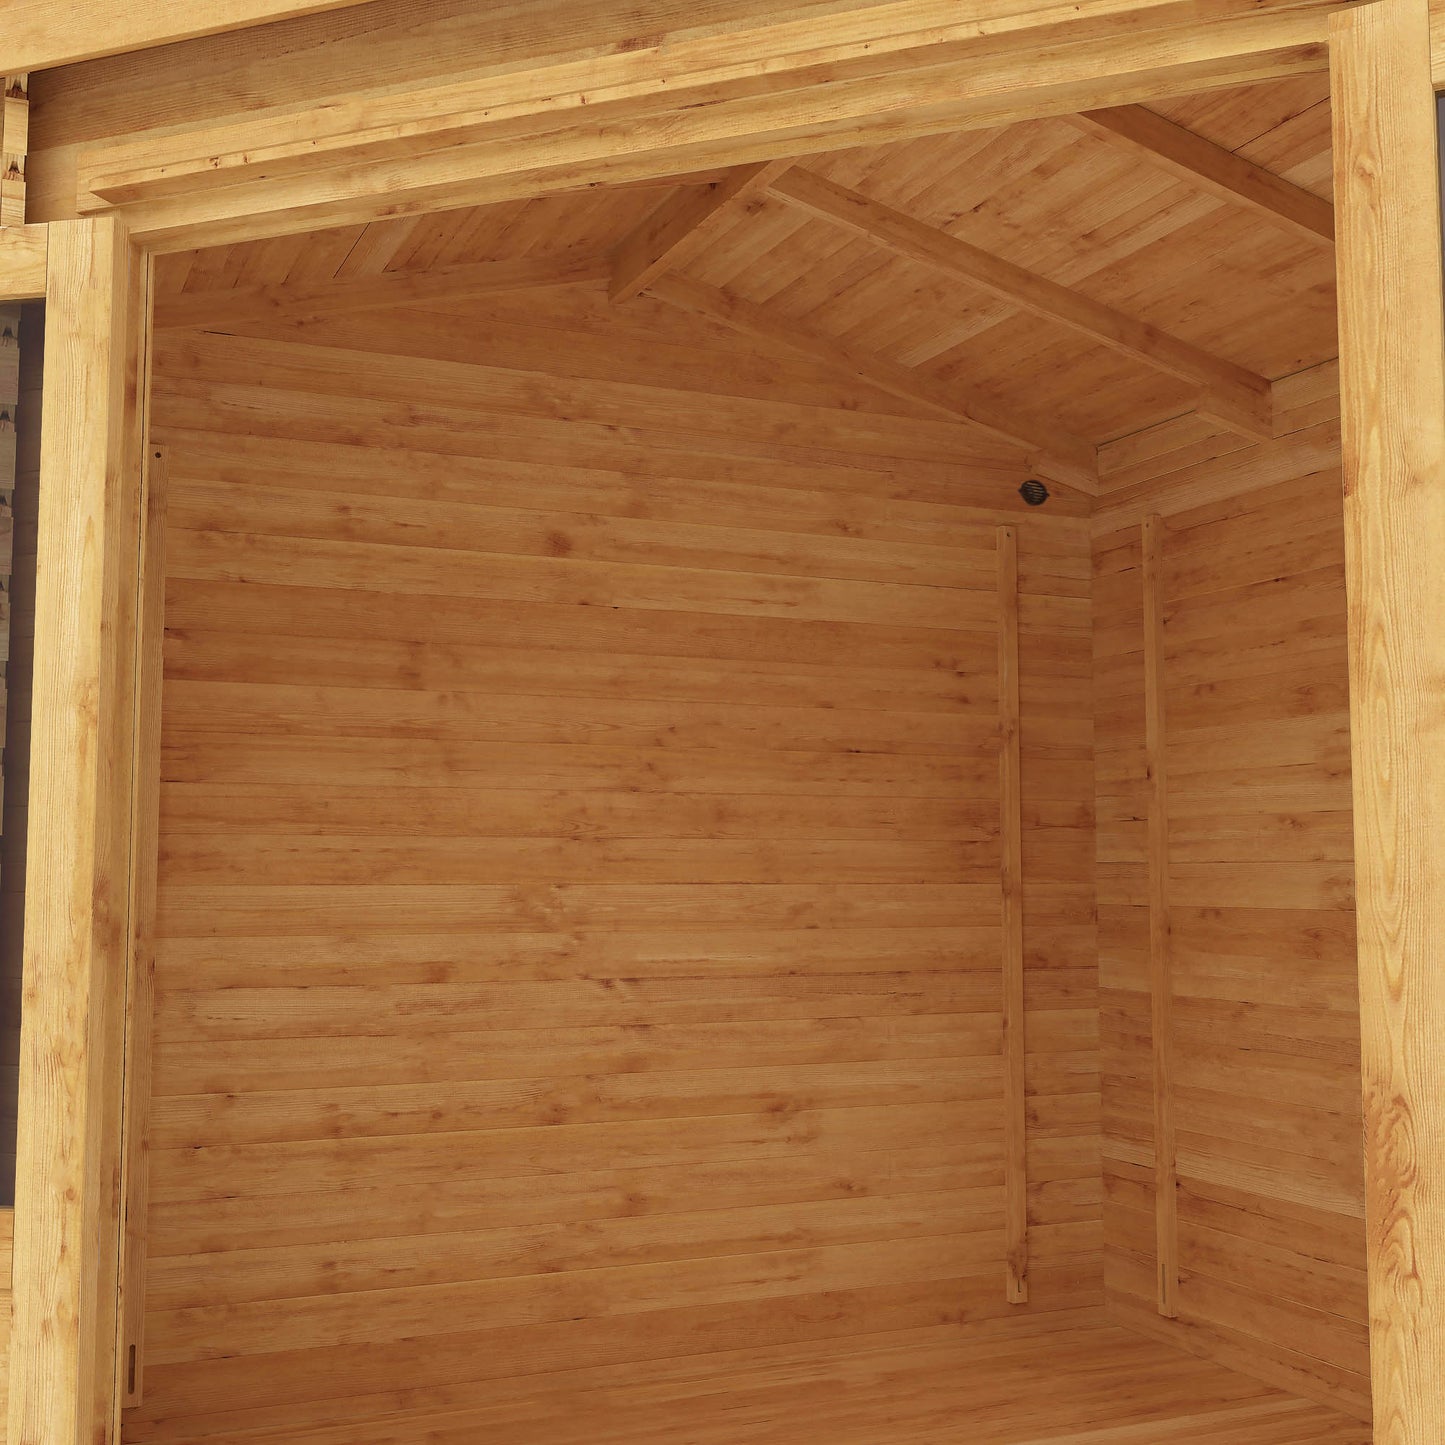 The Goldcrest 3m x 3m Corner Log Cabin